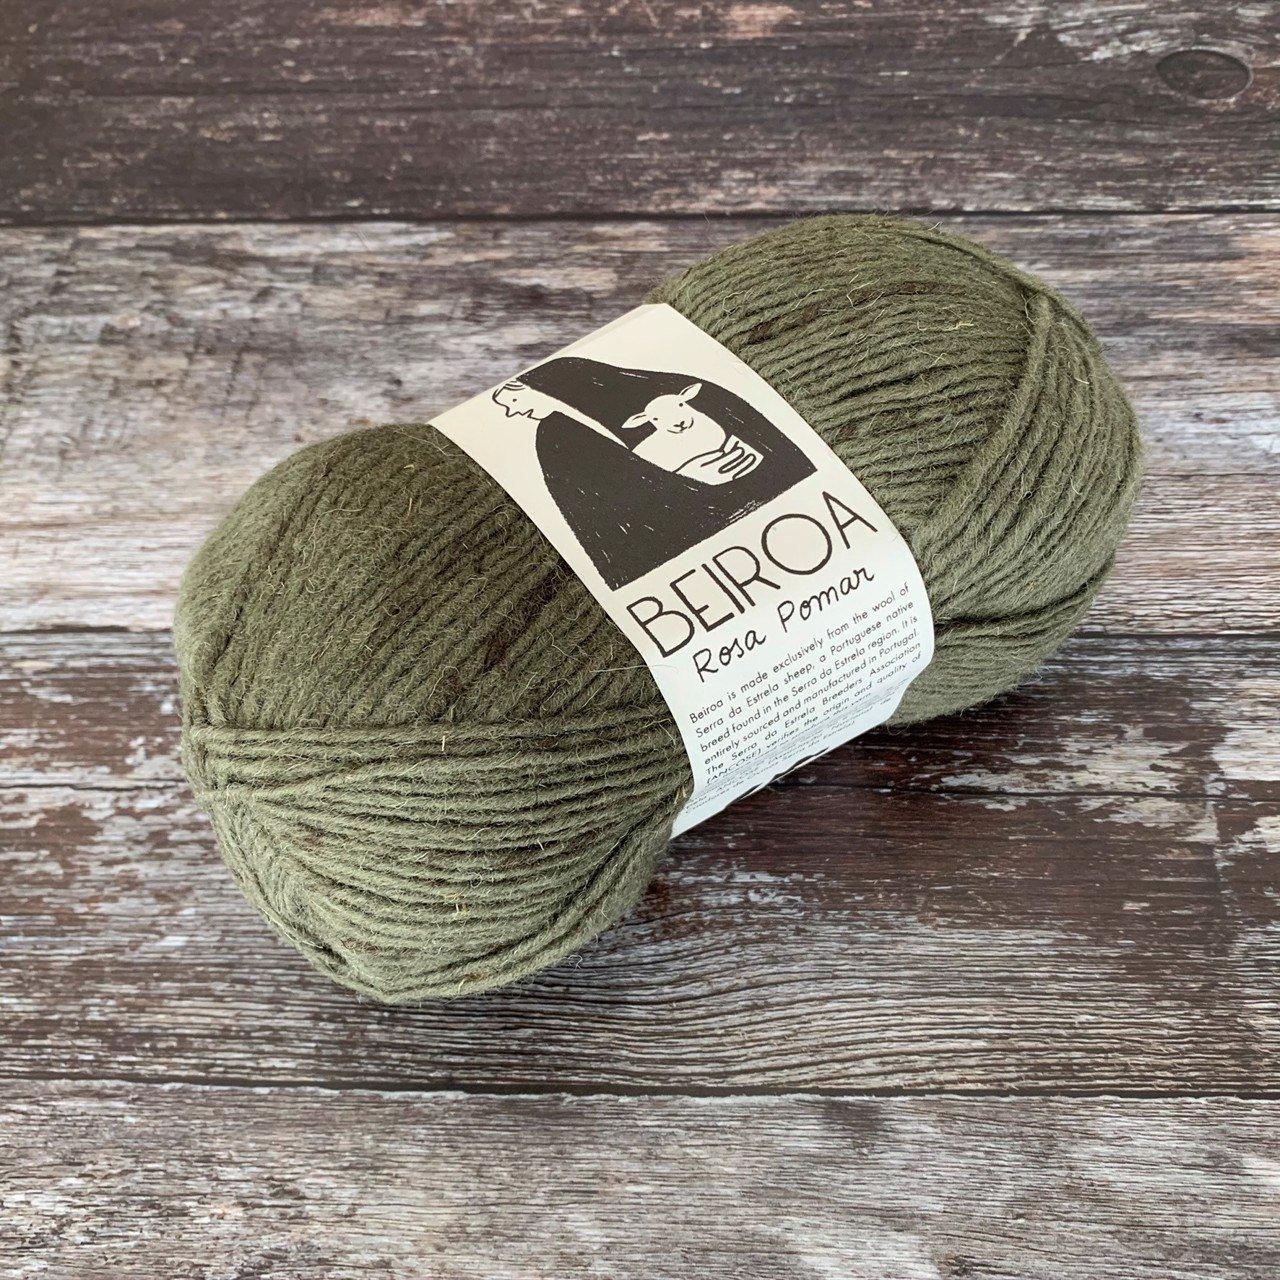 Retrosaria Retrosaria Beiroa - 625 - Worsted Knitting Yarn